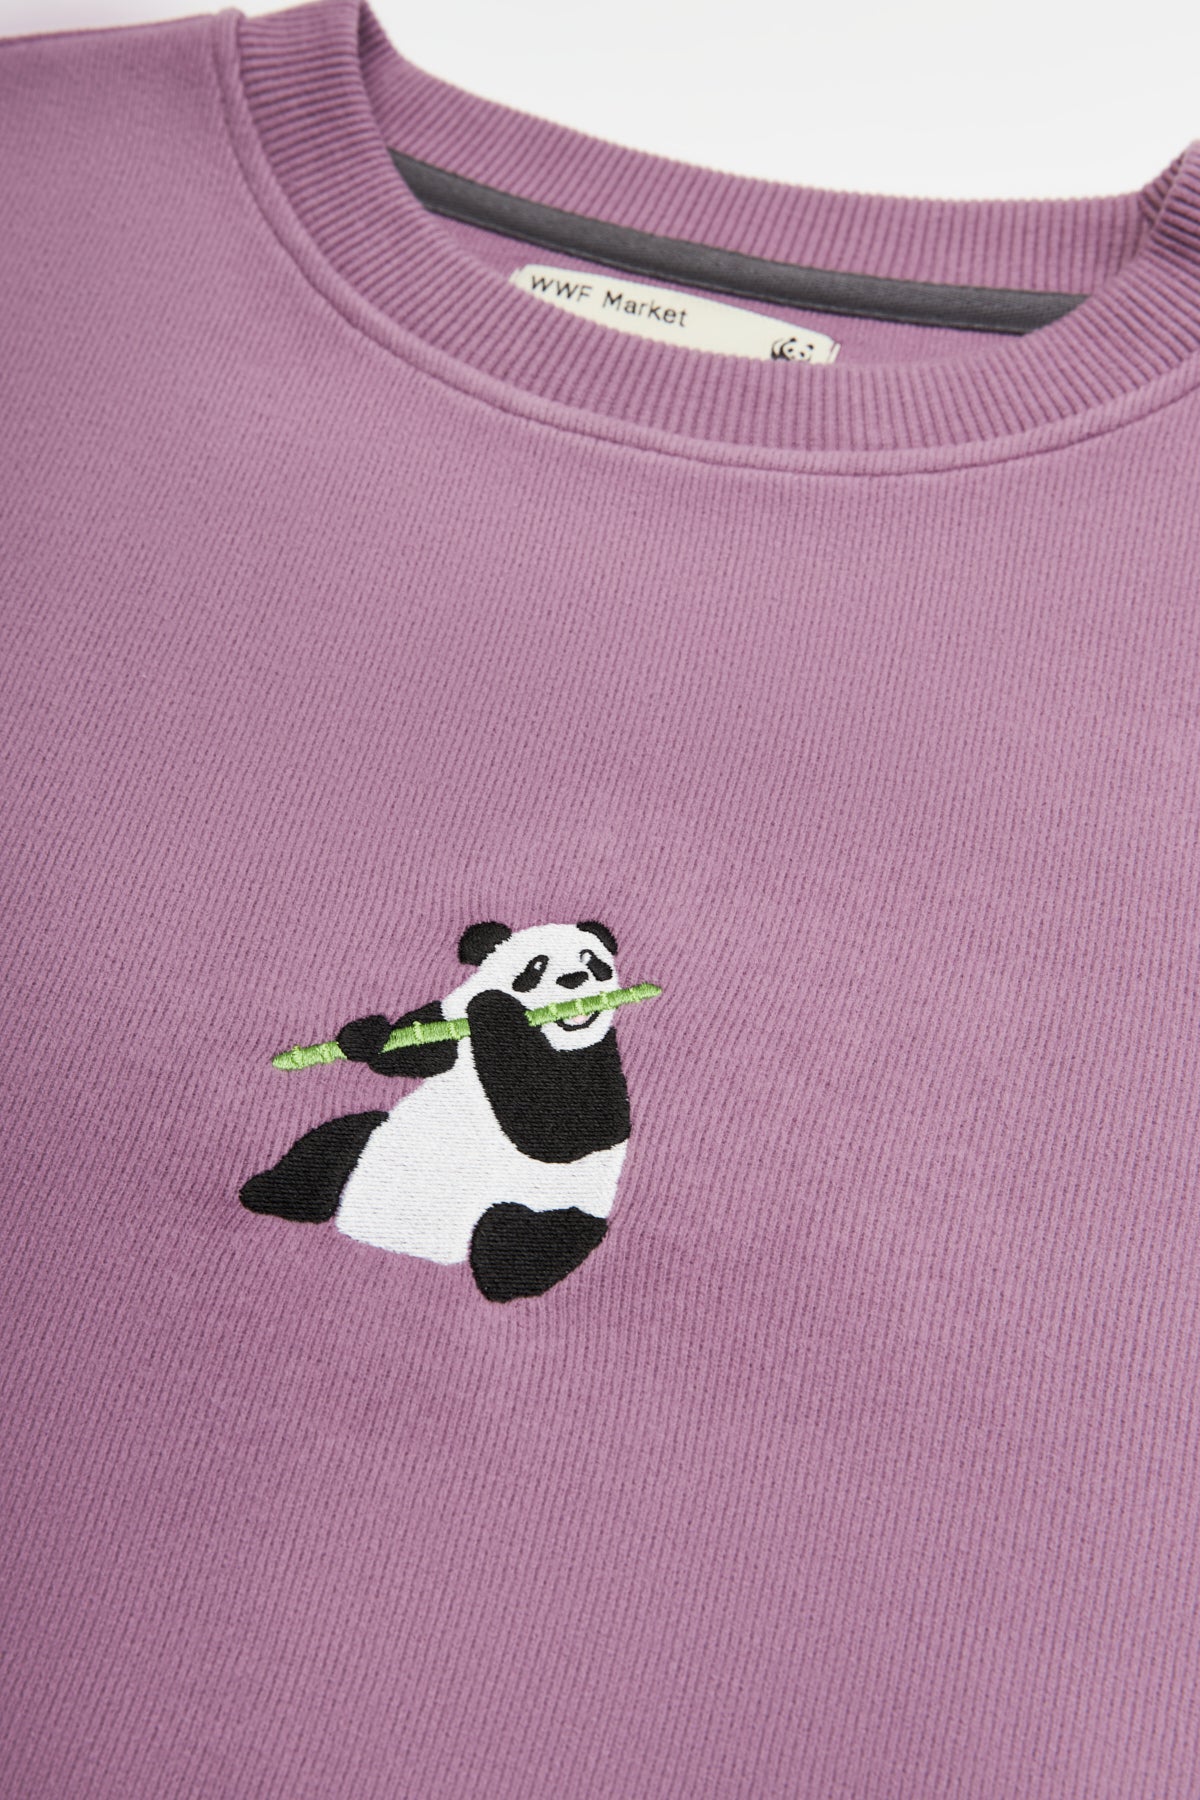 Giant Panda Super Soft Sweatshirt - Leylak